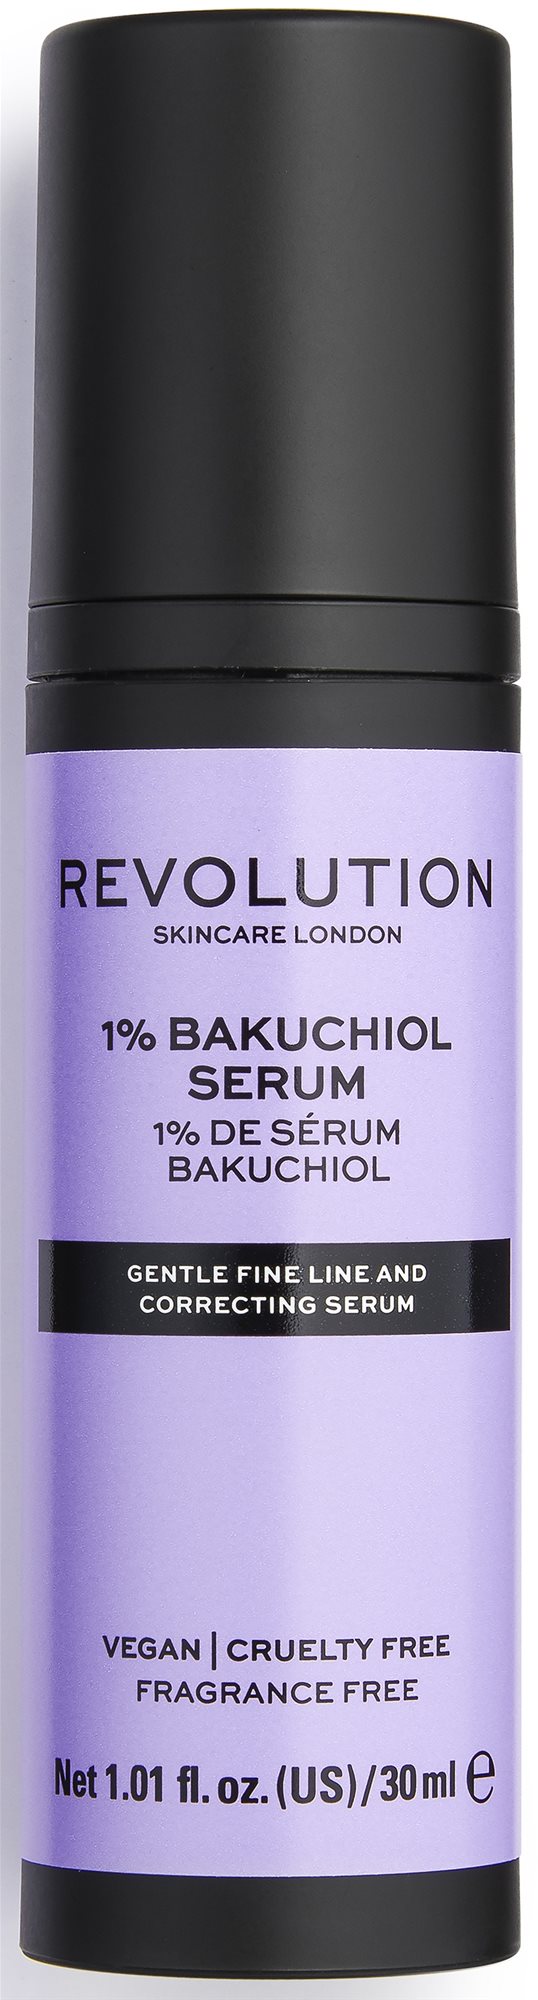 REVOLUTION SKINCARE 1% Bakuchiol Serum 30 ml